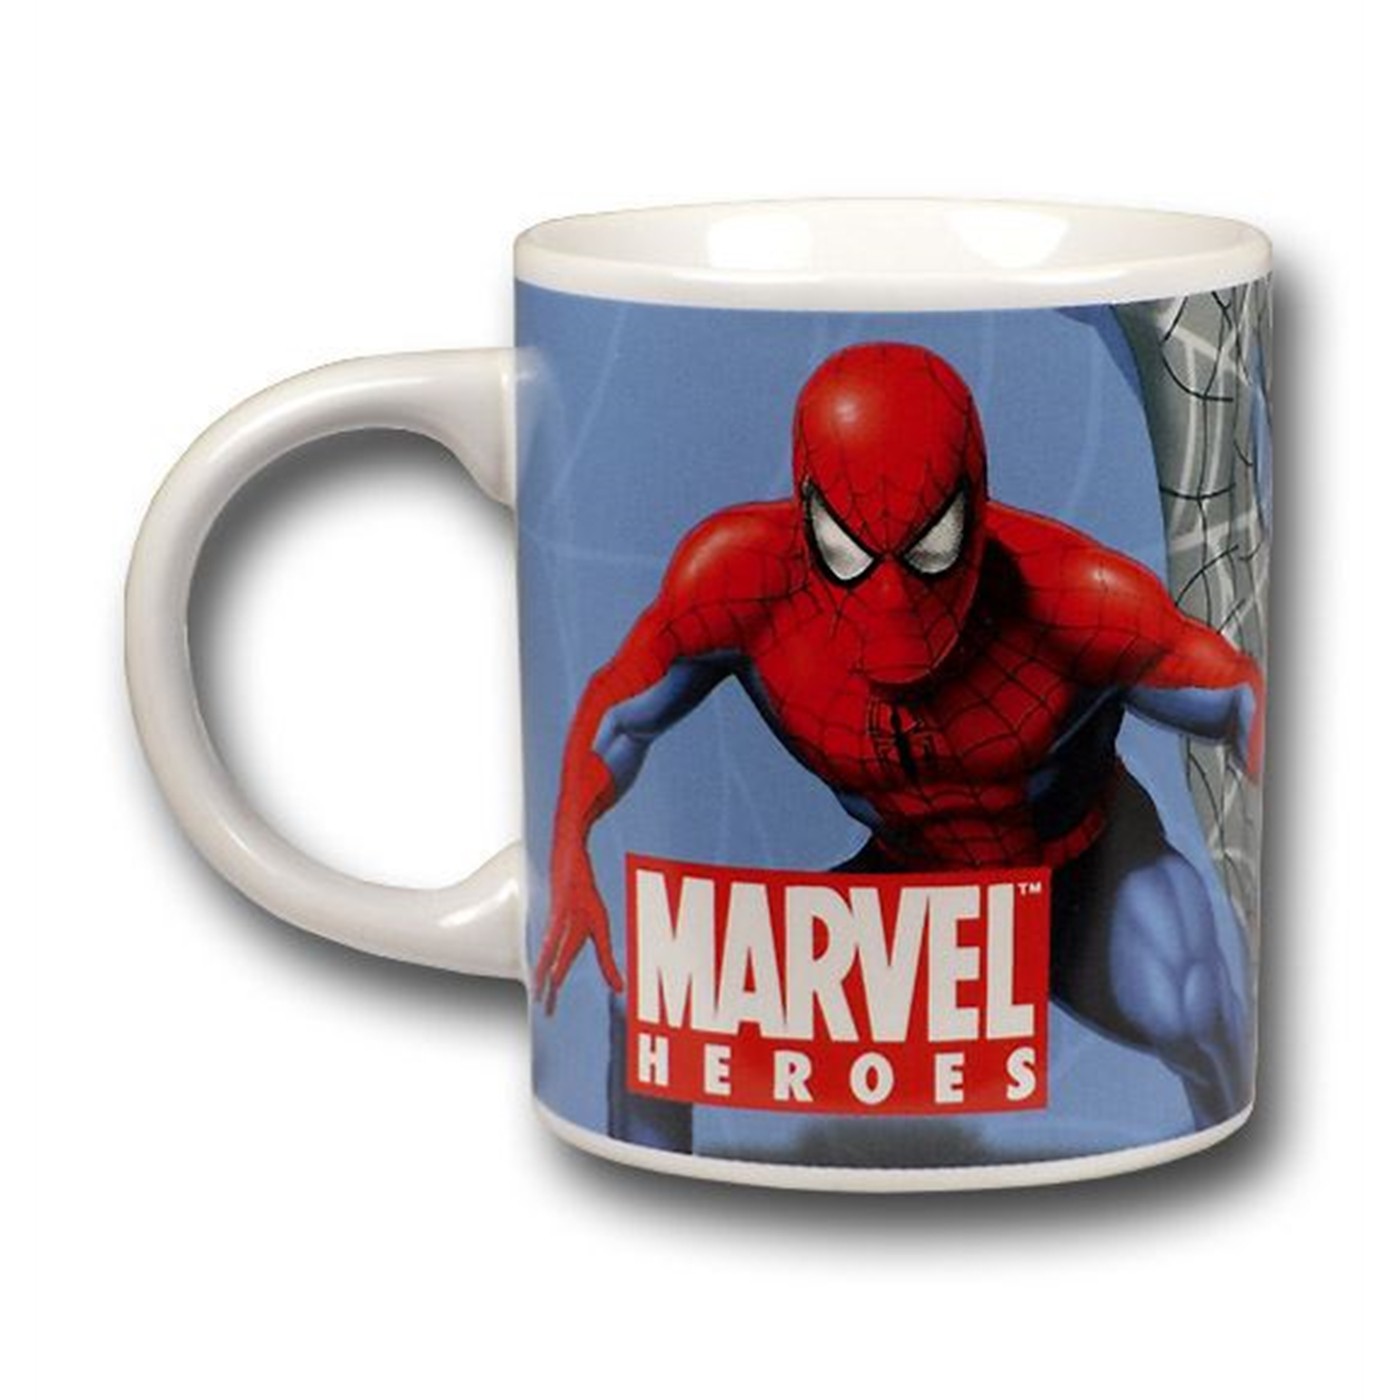 Spiderman Trifecta Ceramic Mug